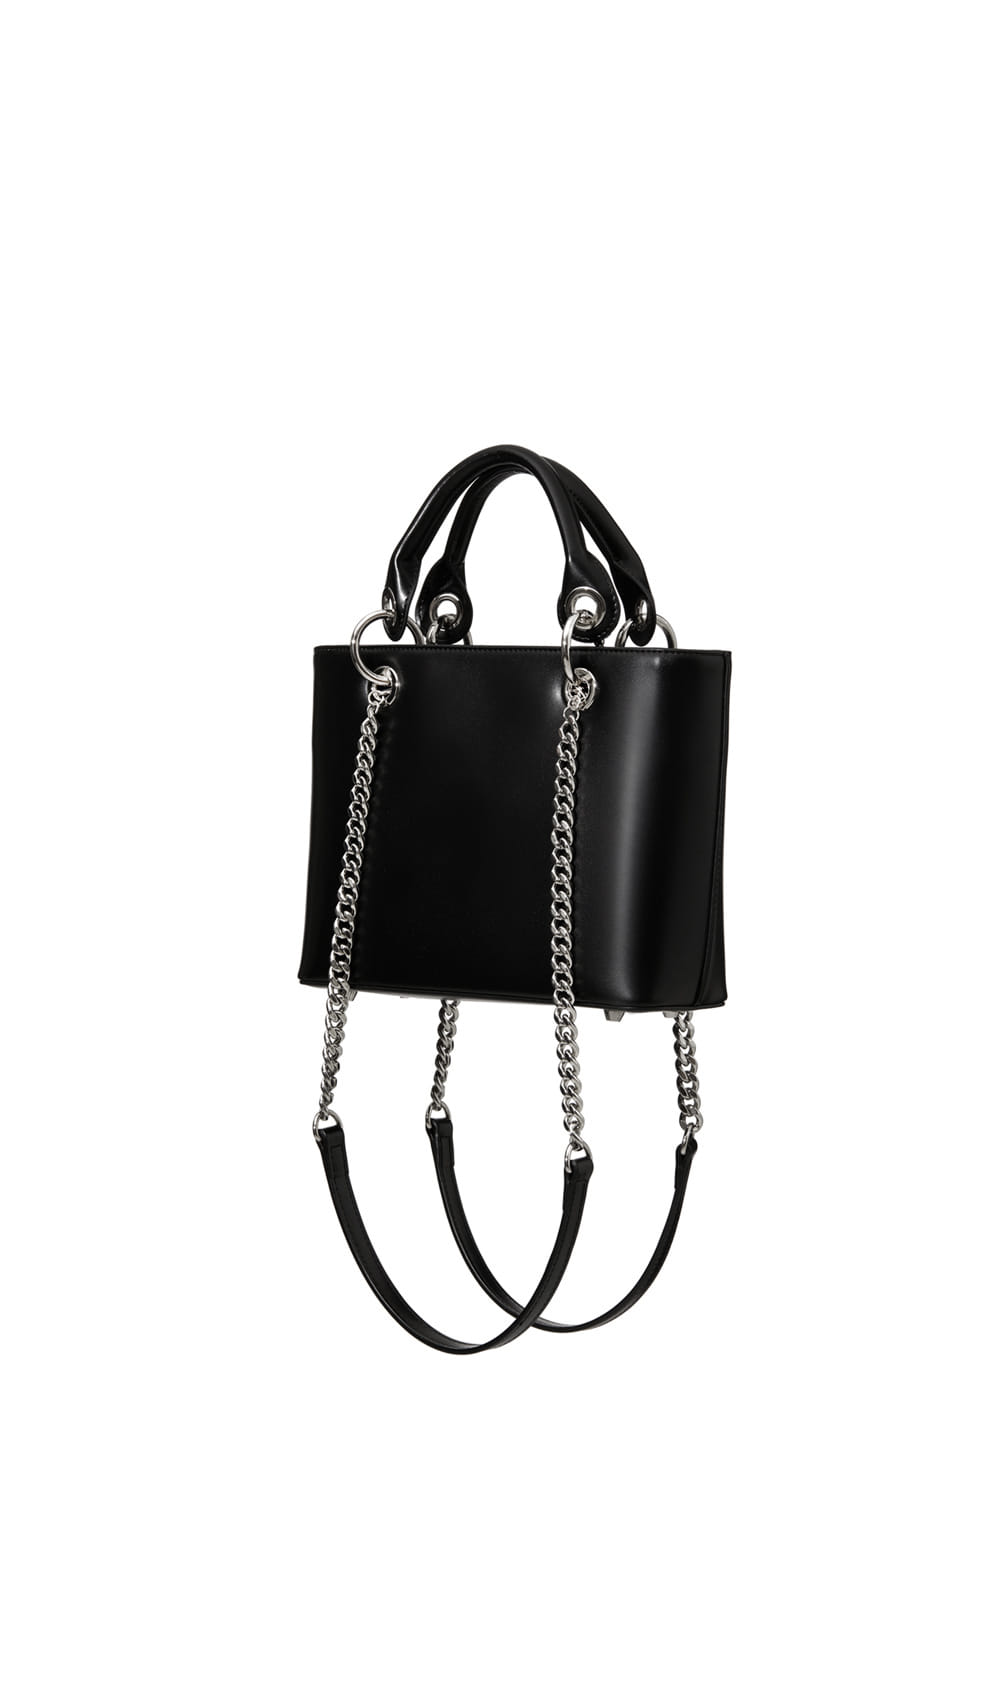 YOOUR Small Bag | Black | Chain |